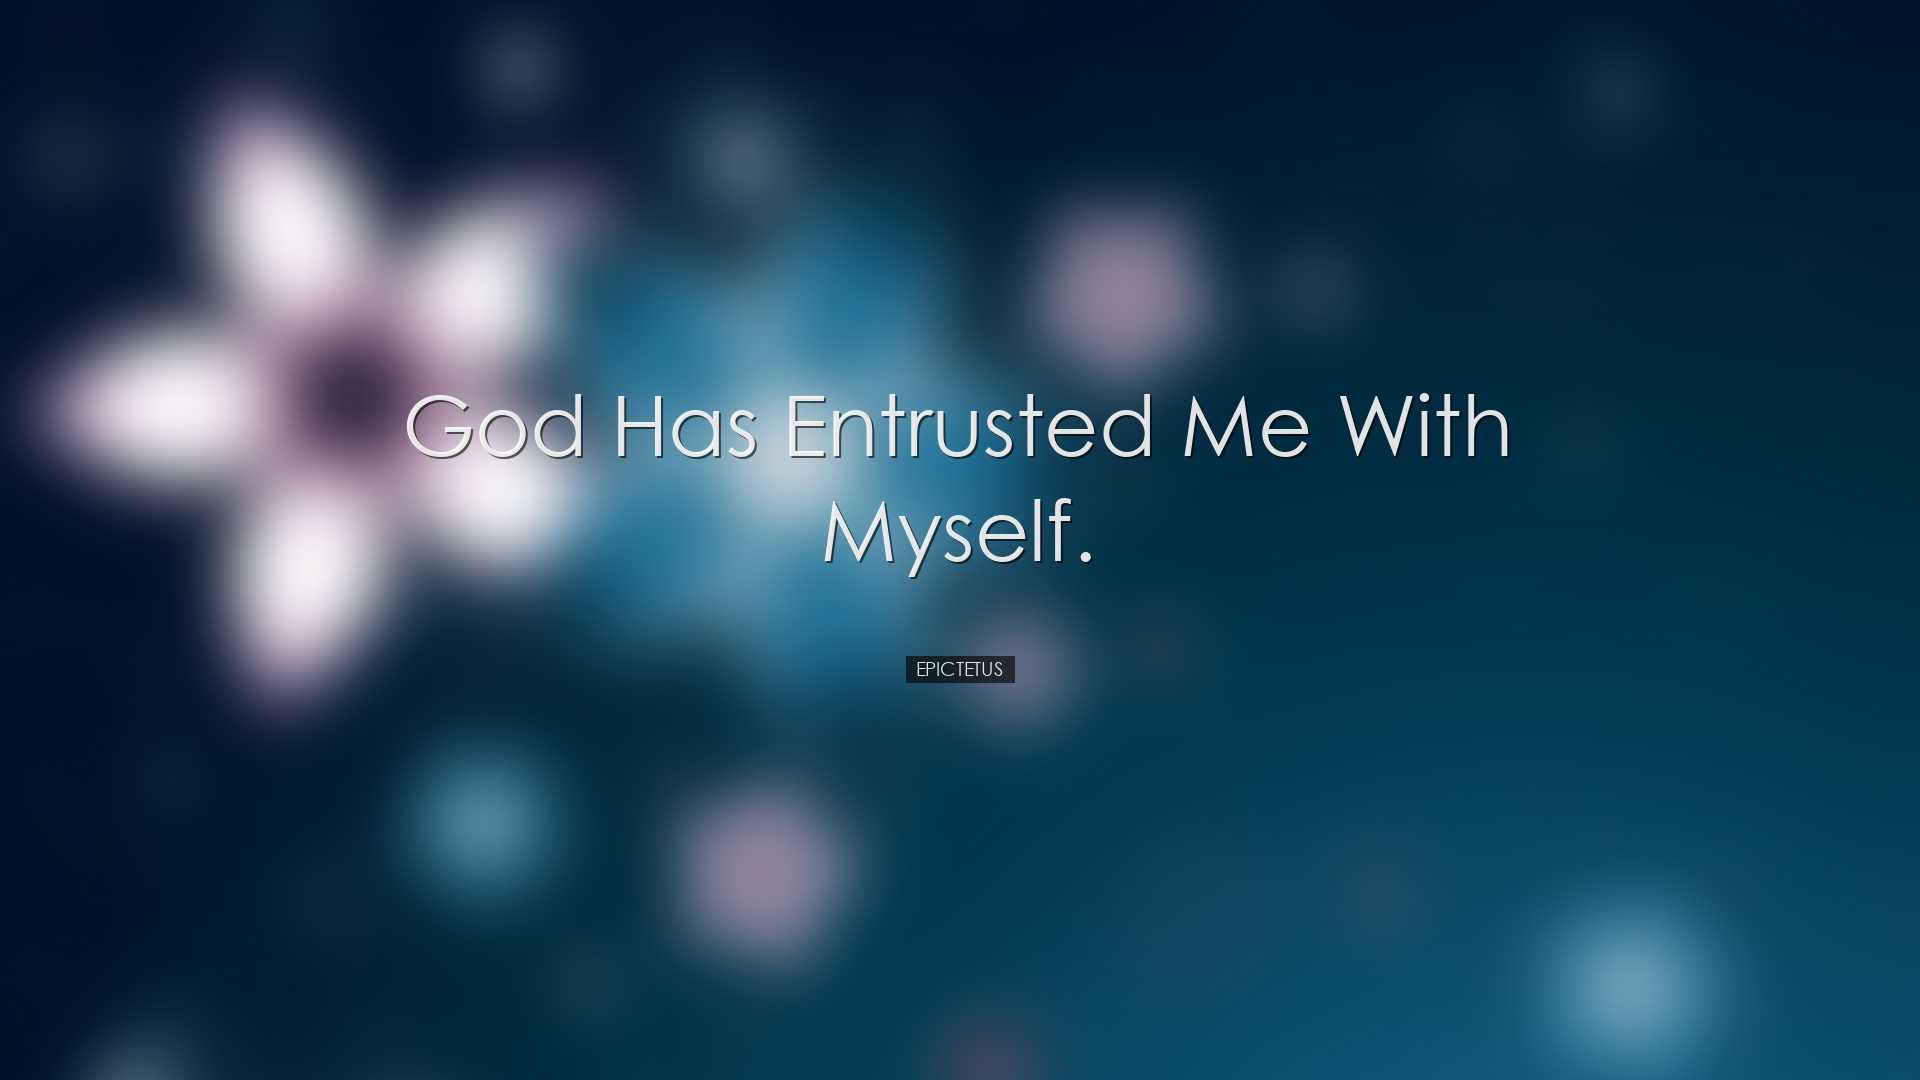 God has entrusted me with myself. - Epictetus